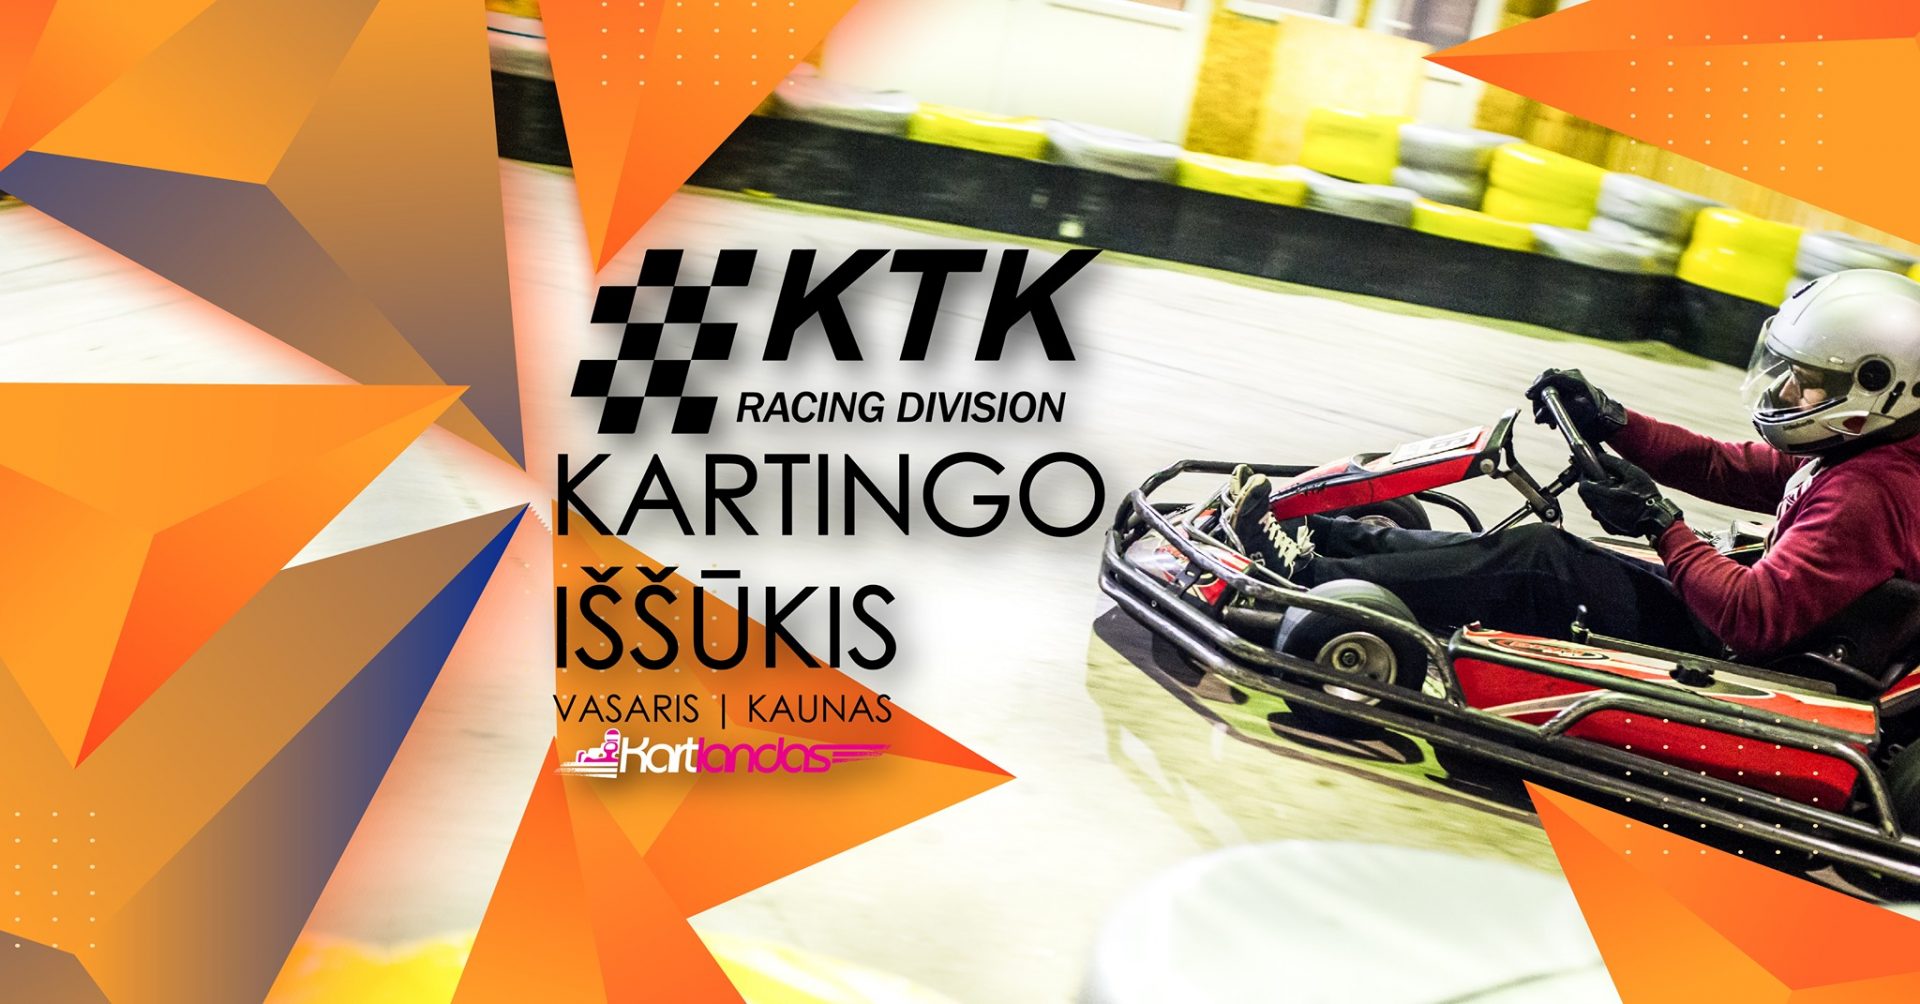 KTK Racing Division kartingo iššūkis. Kaunas